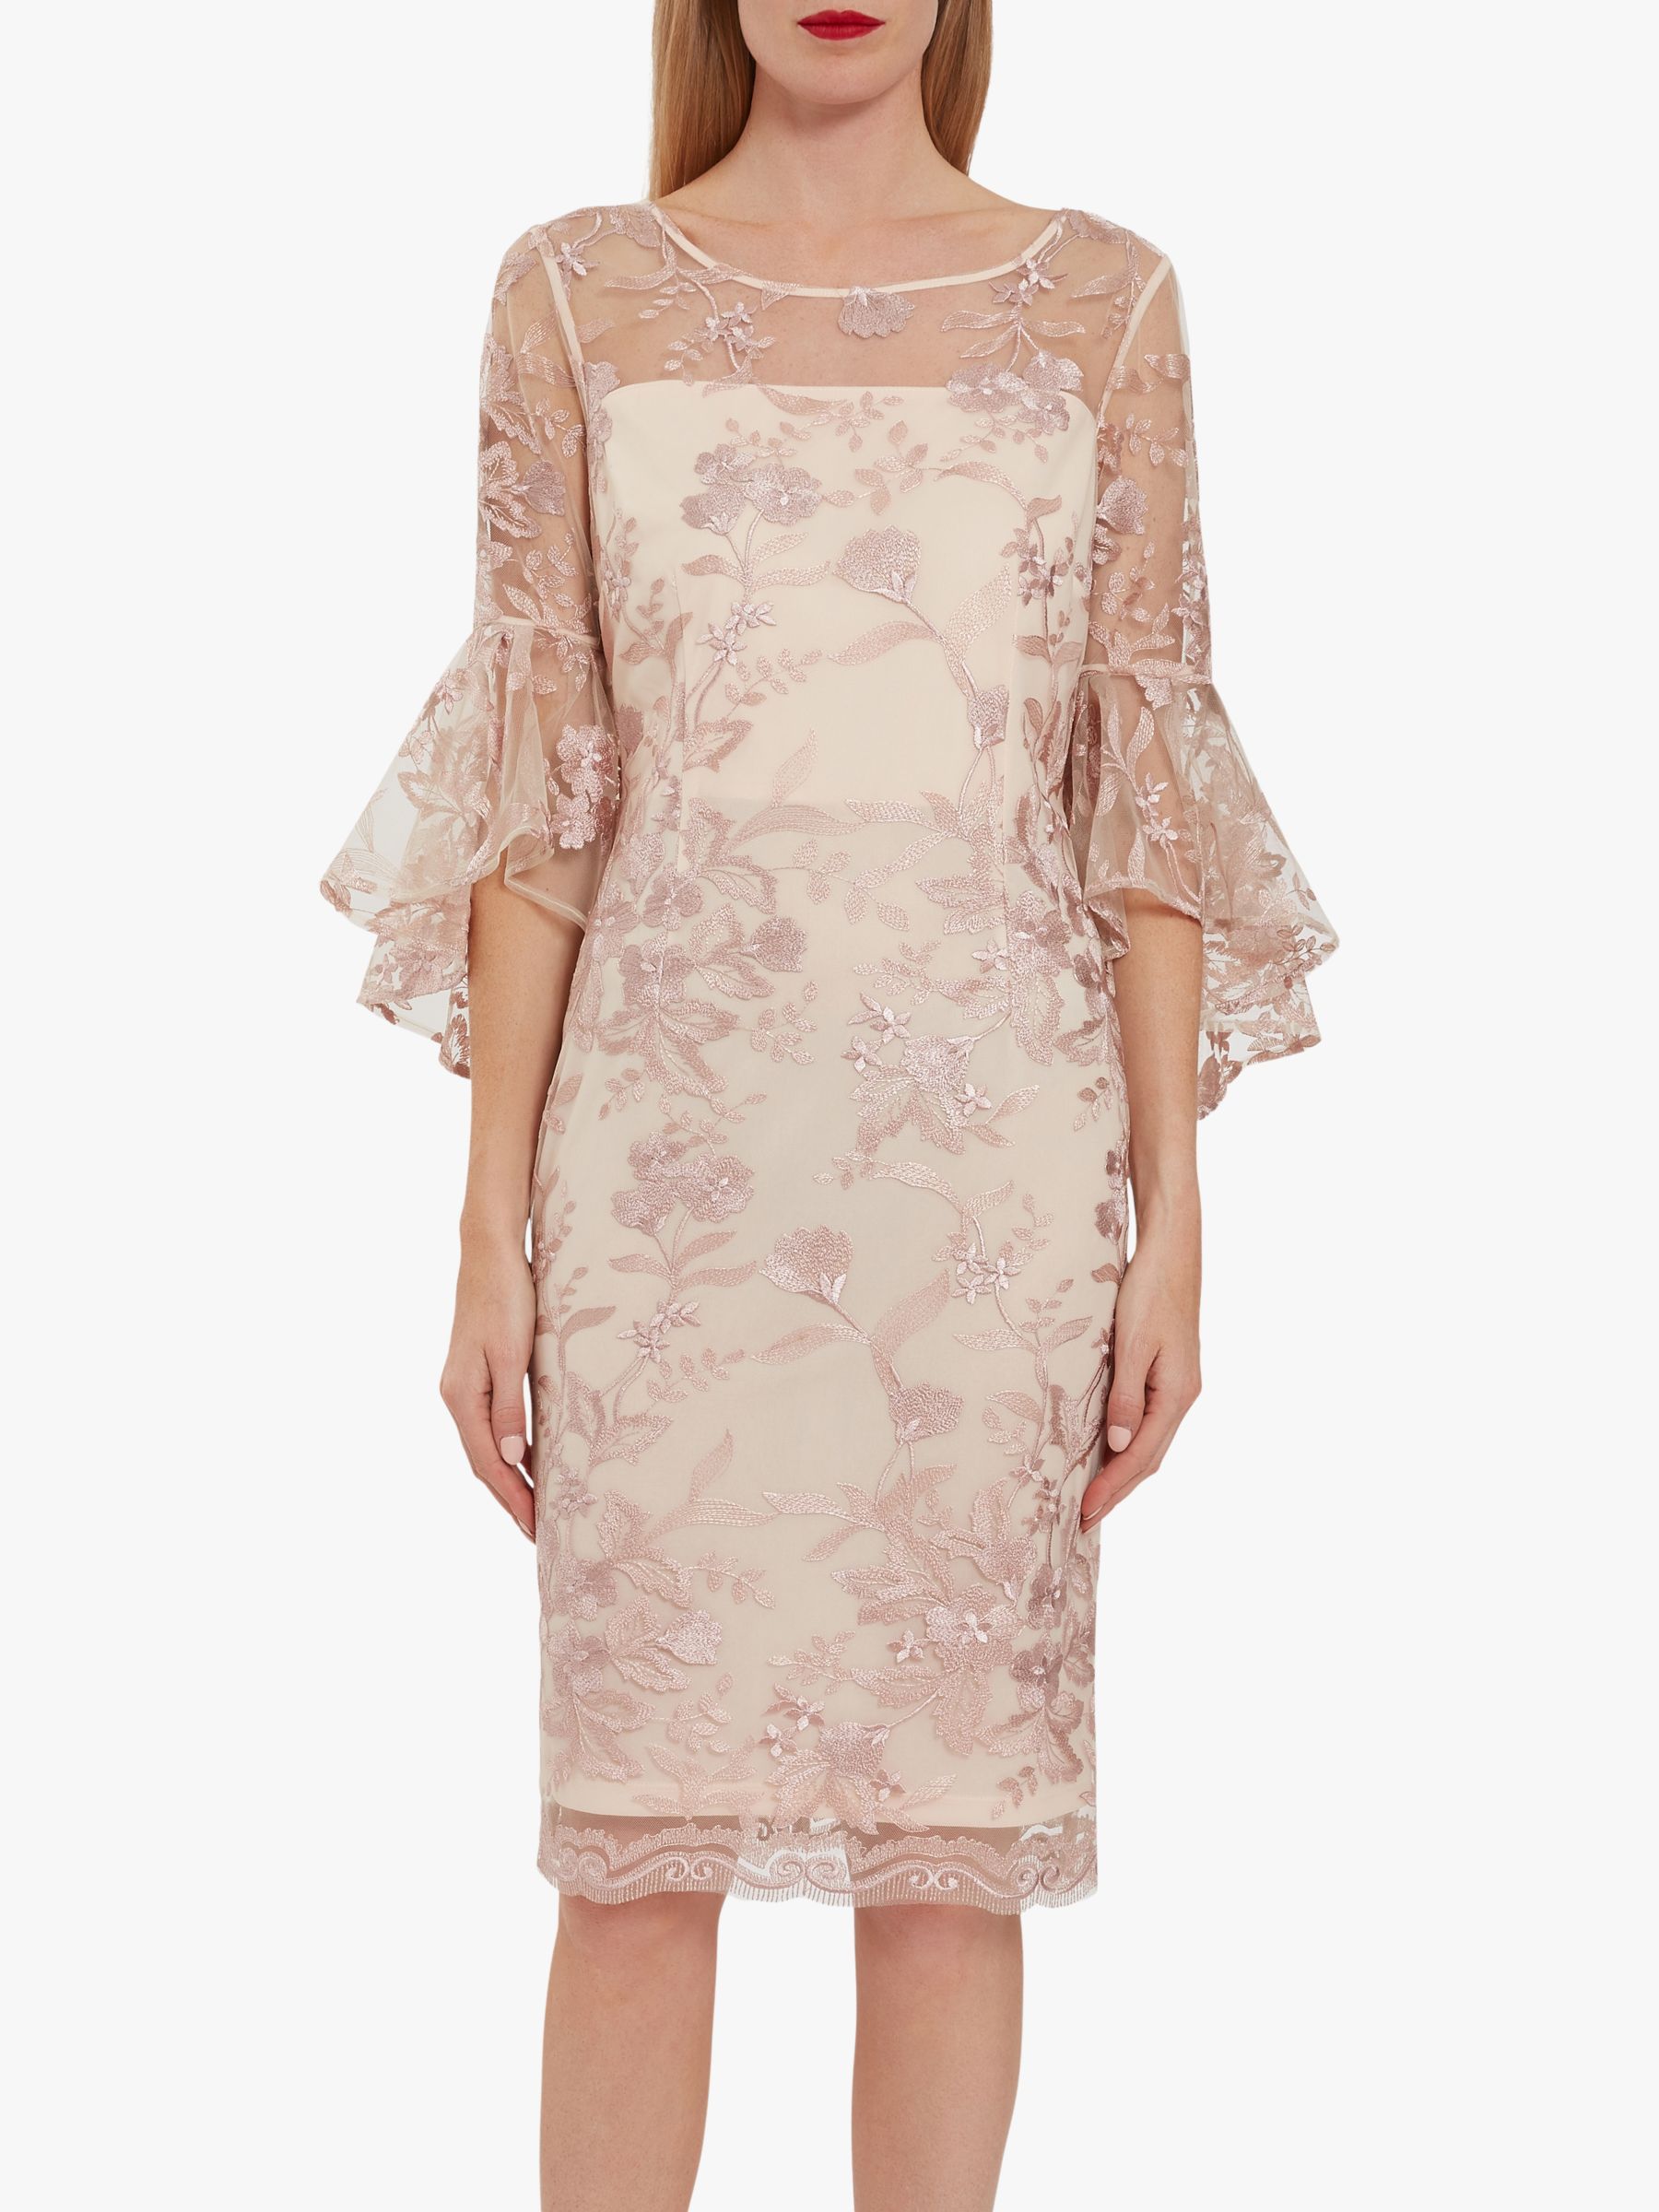 Gina Bacconi Graciana Floral Embroidery Crepe Dress, Nude Pink